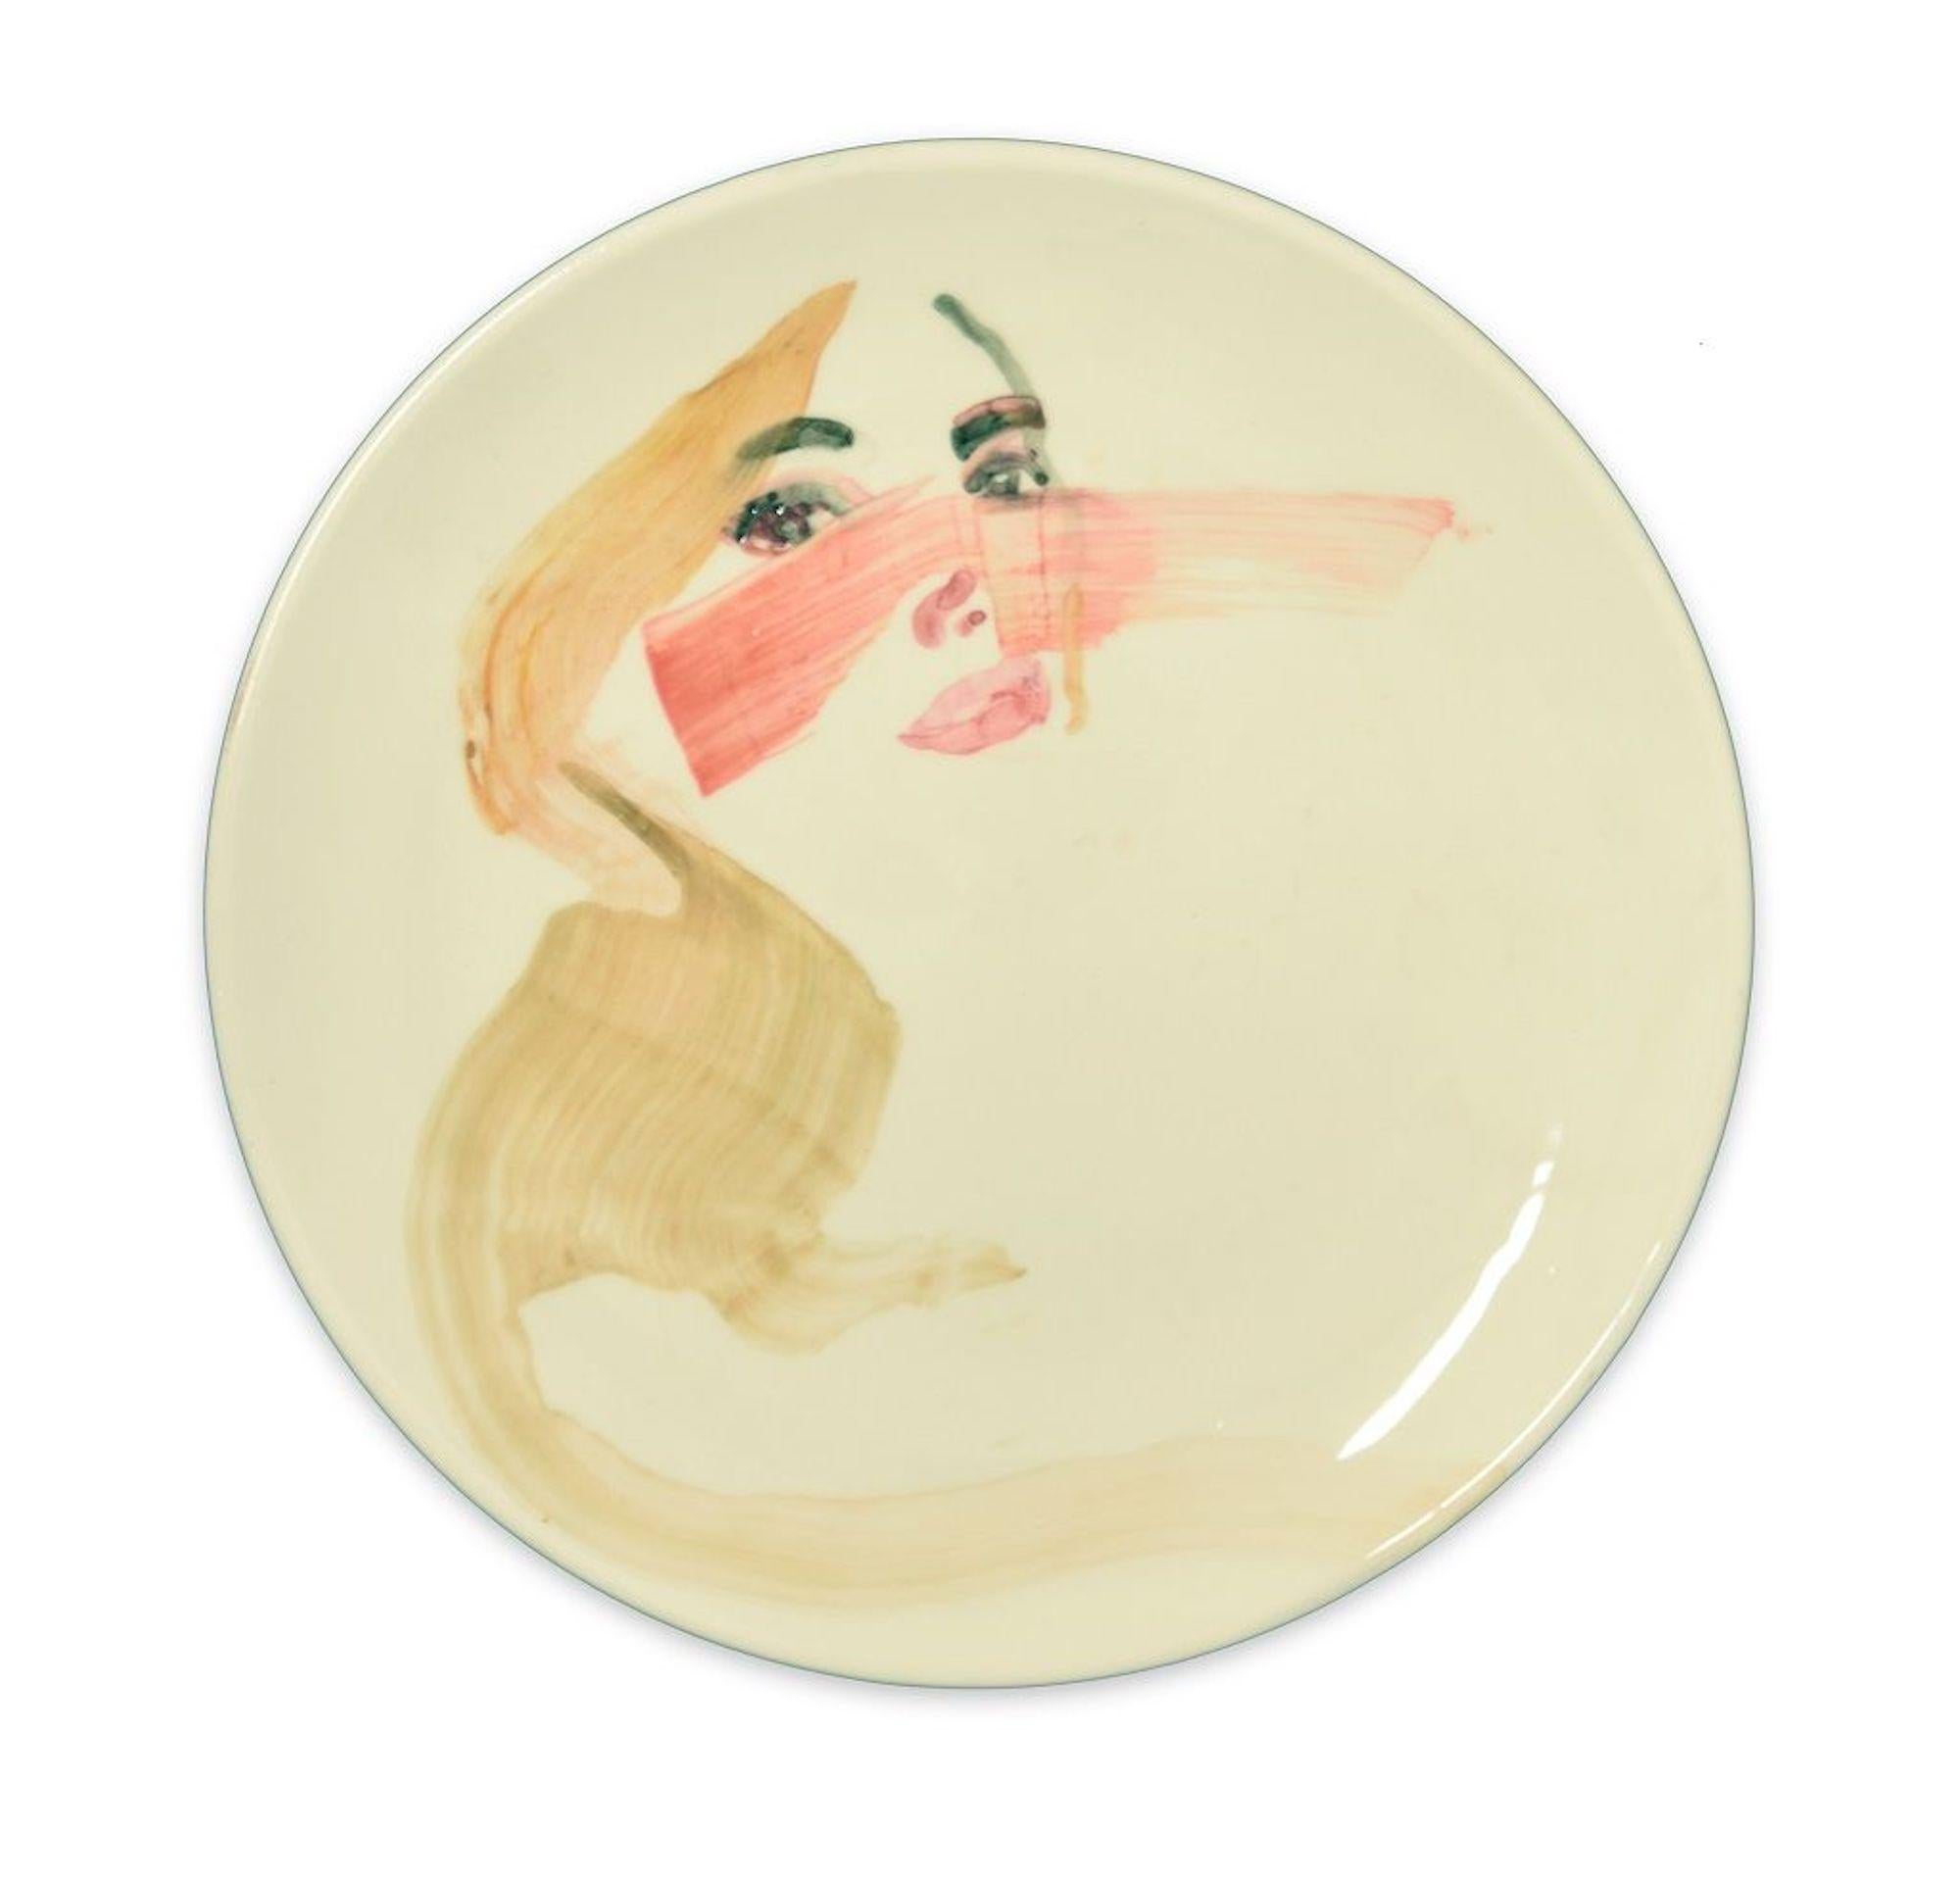 Lady - Original  Hand-made Flat Ceramic Dish by A. Kurakina - 2019 - Art by Anastasia Kurakina